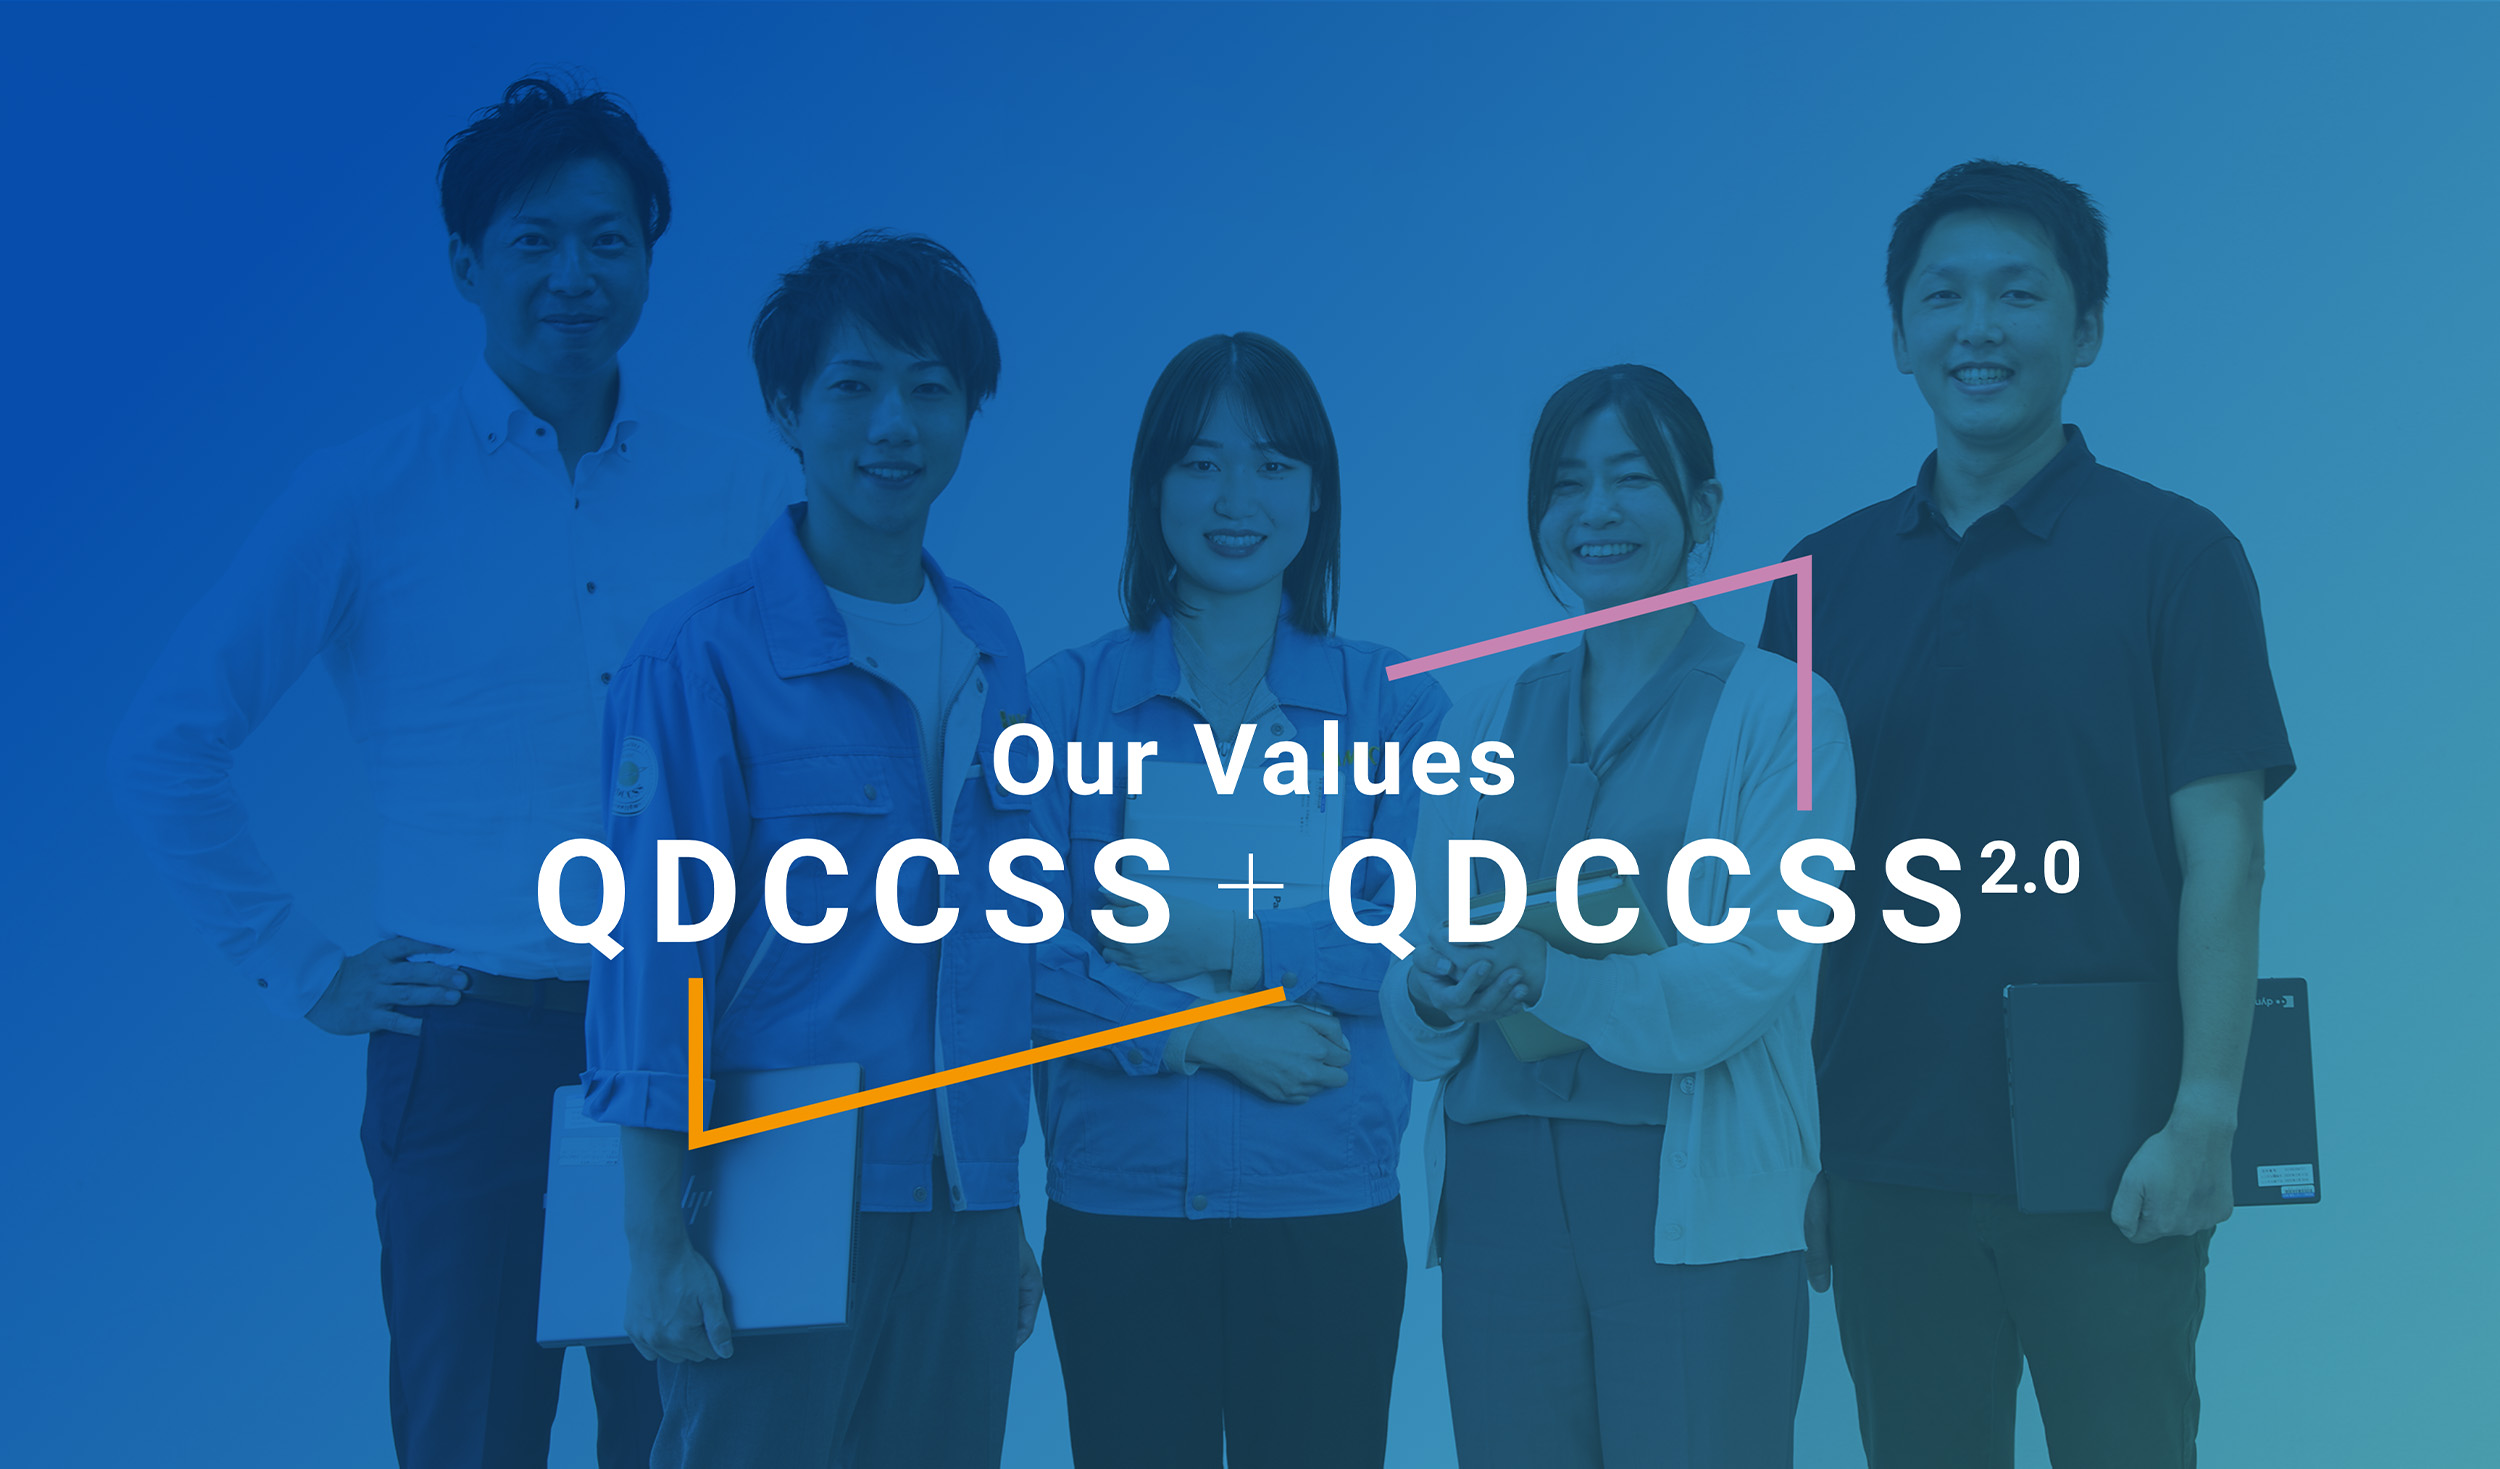 Our Values, QDCCSS + QDCCSS2.0